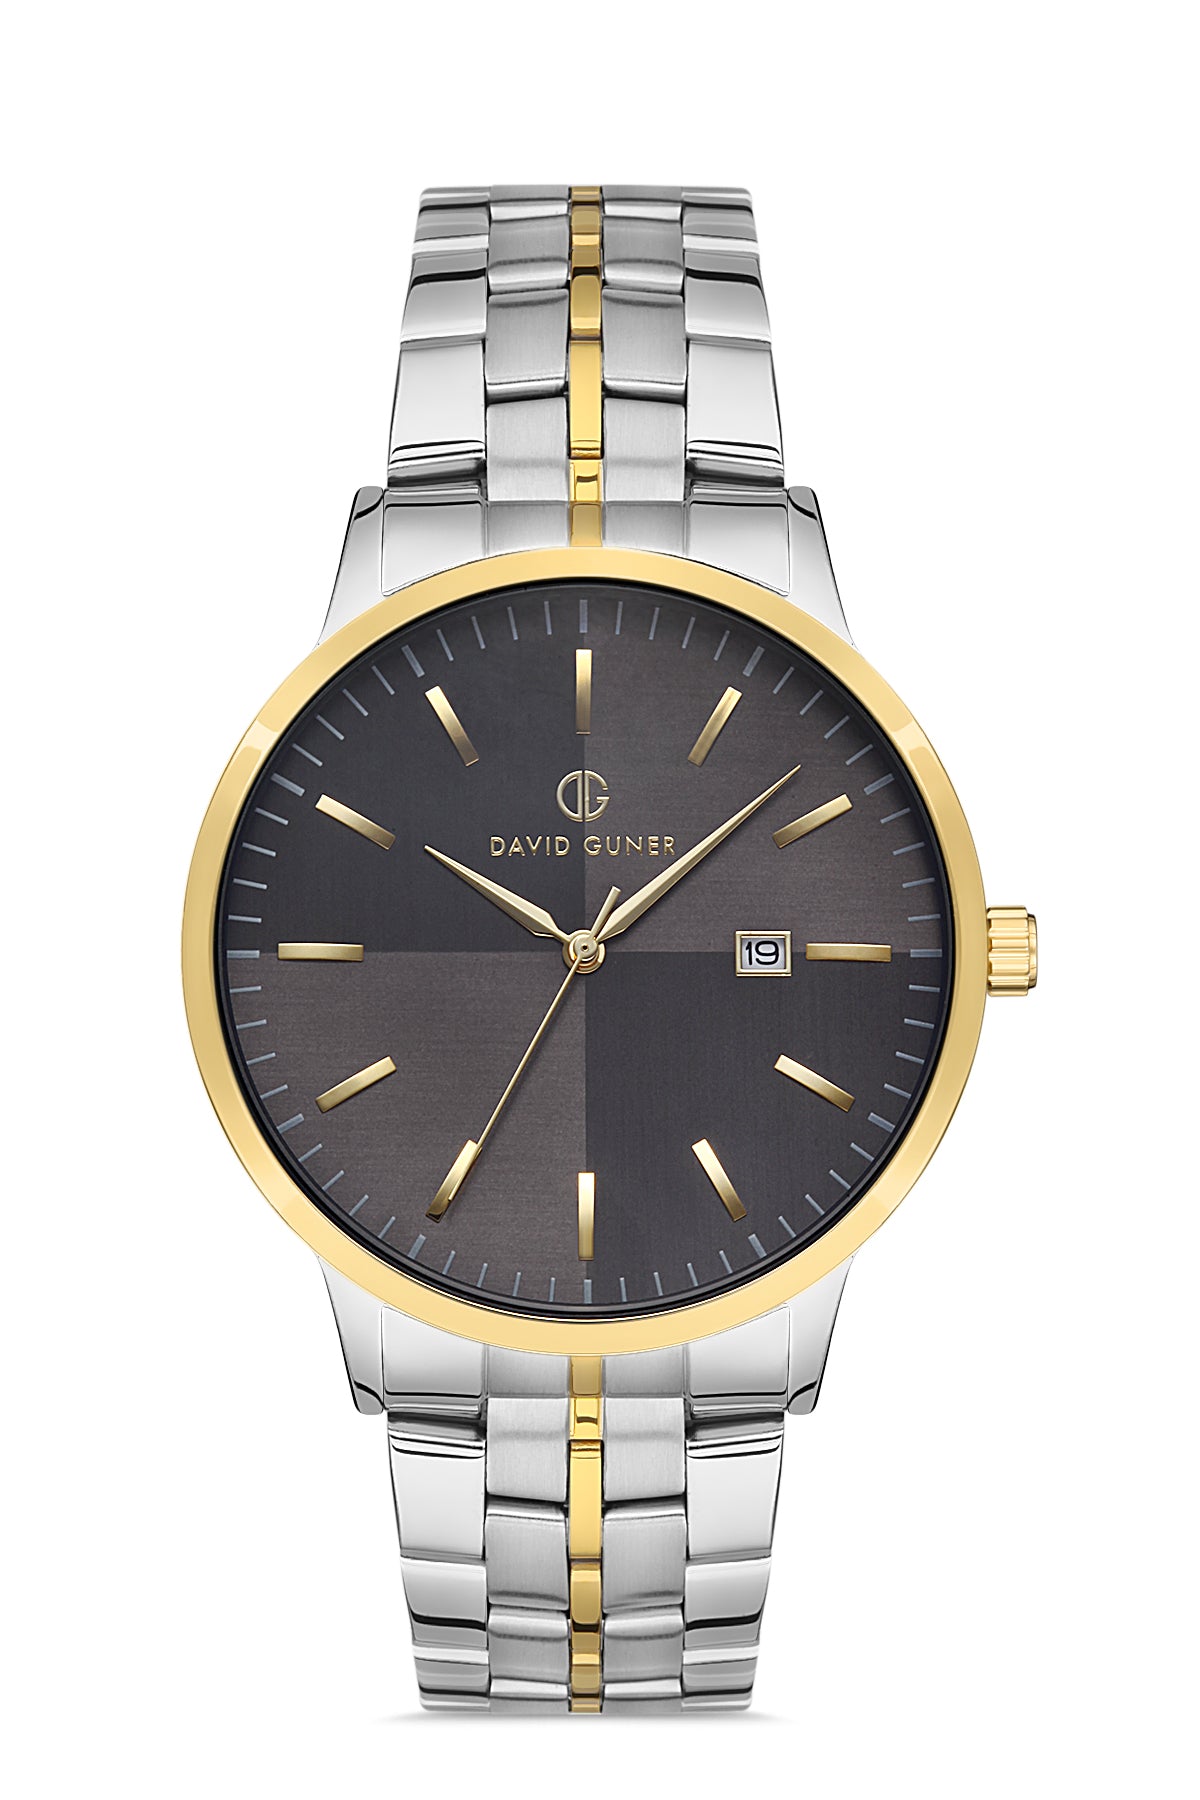 DAVID GUNER Yellow and White Coated Black Dial Calendar Men's Wristwatch